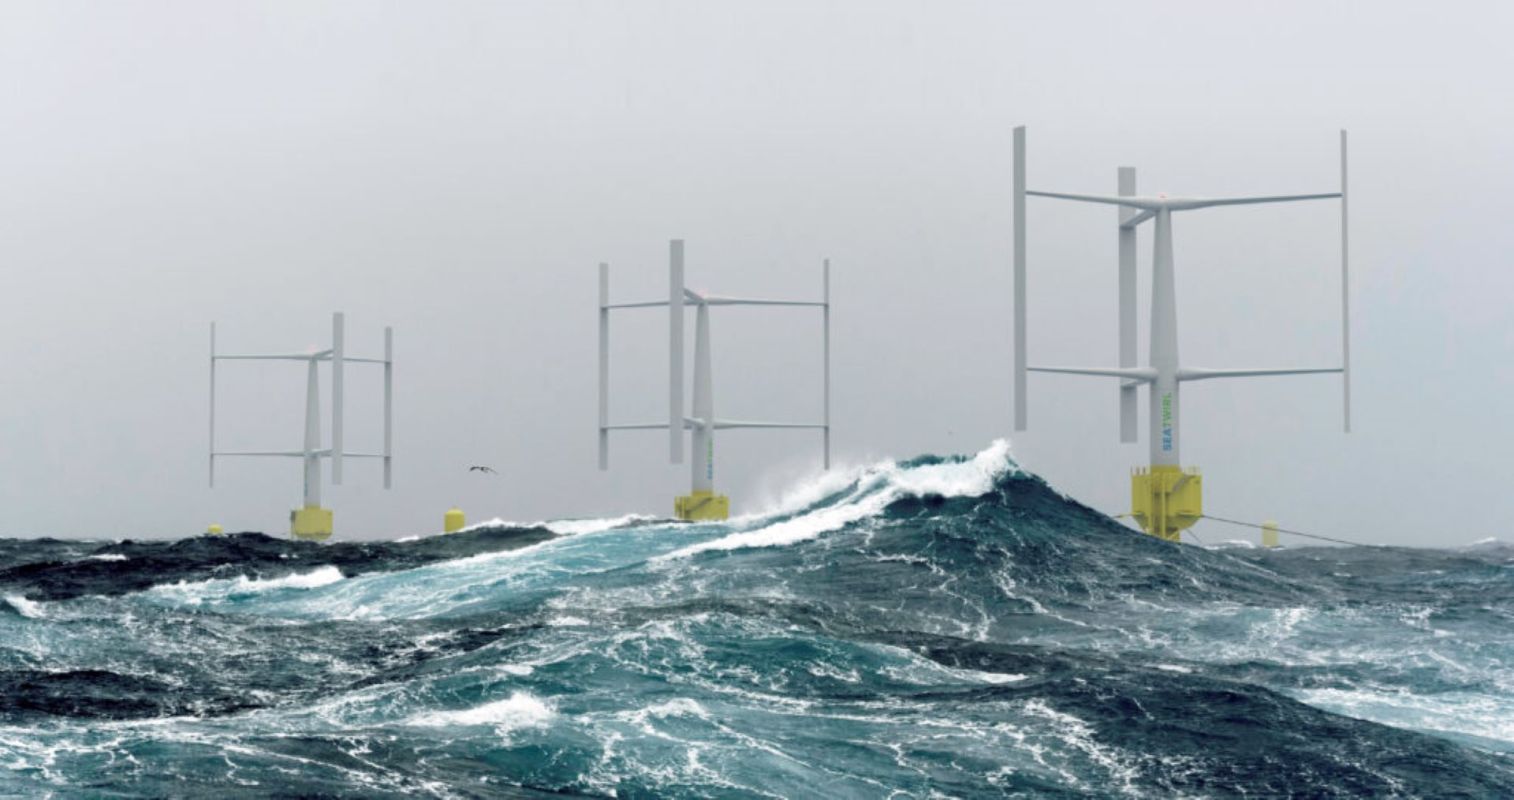 SeaTwirl designs innovative offshore wind turbines